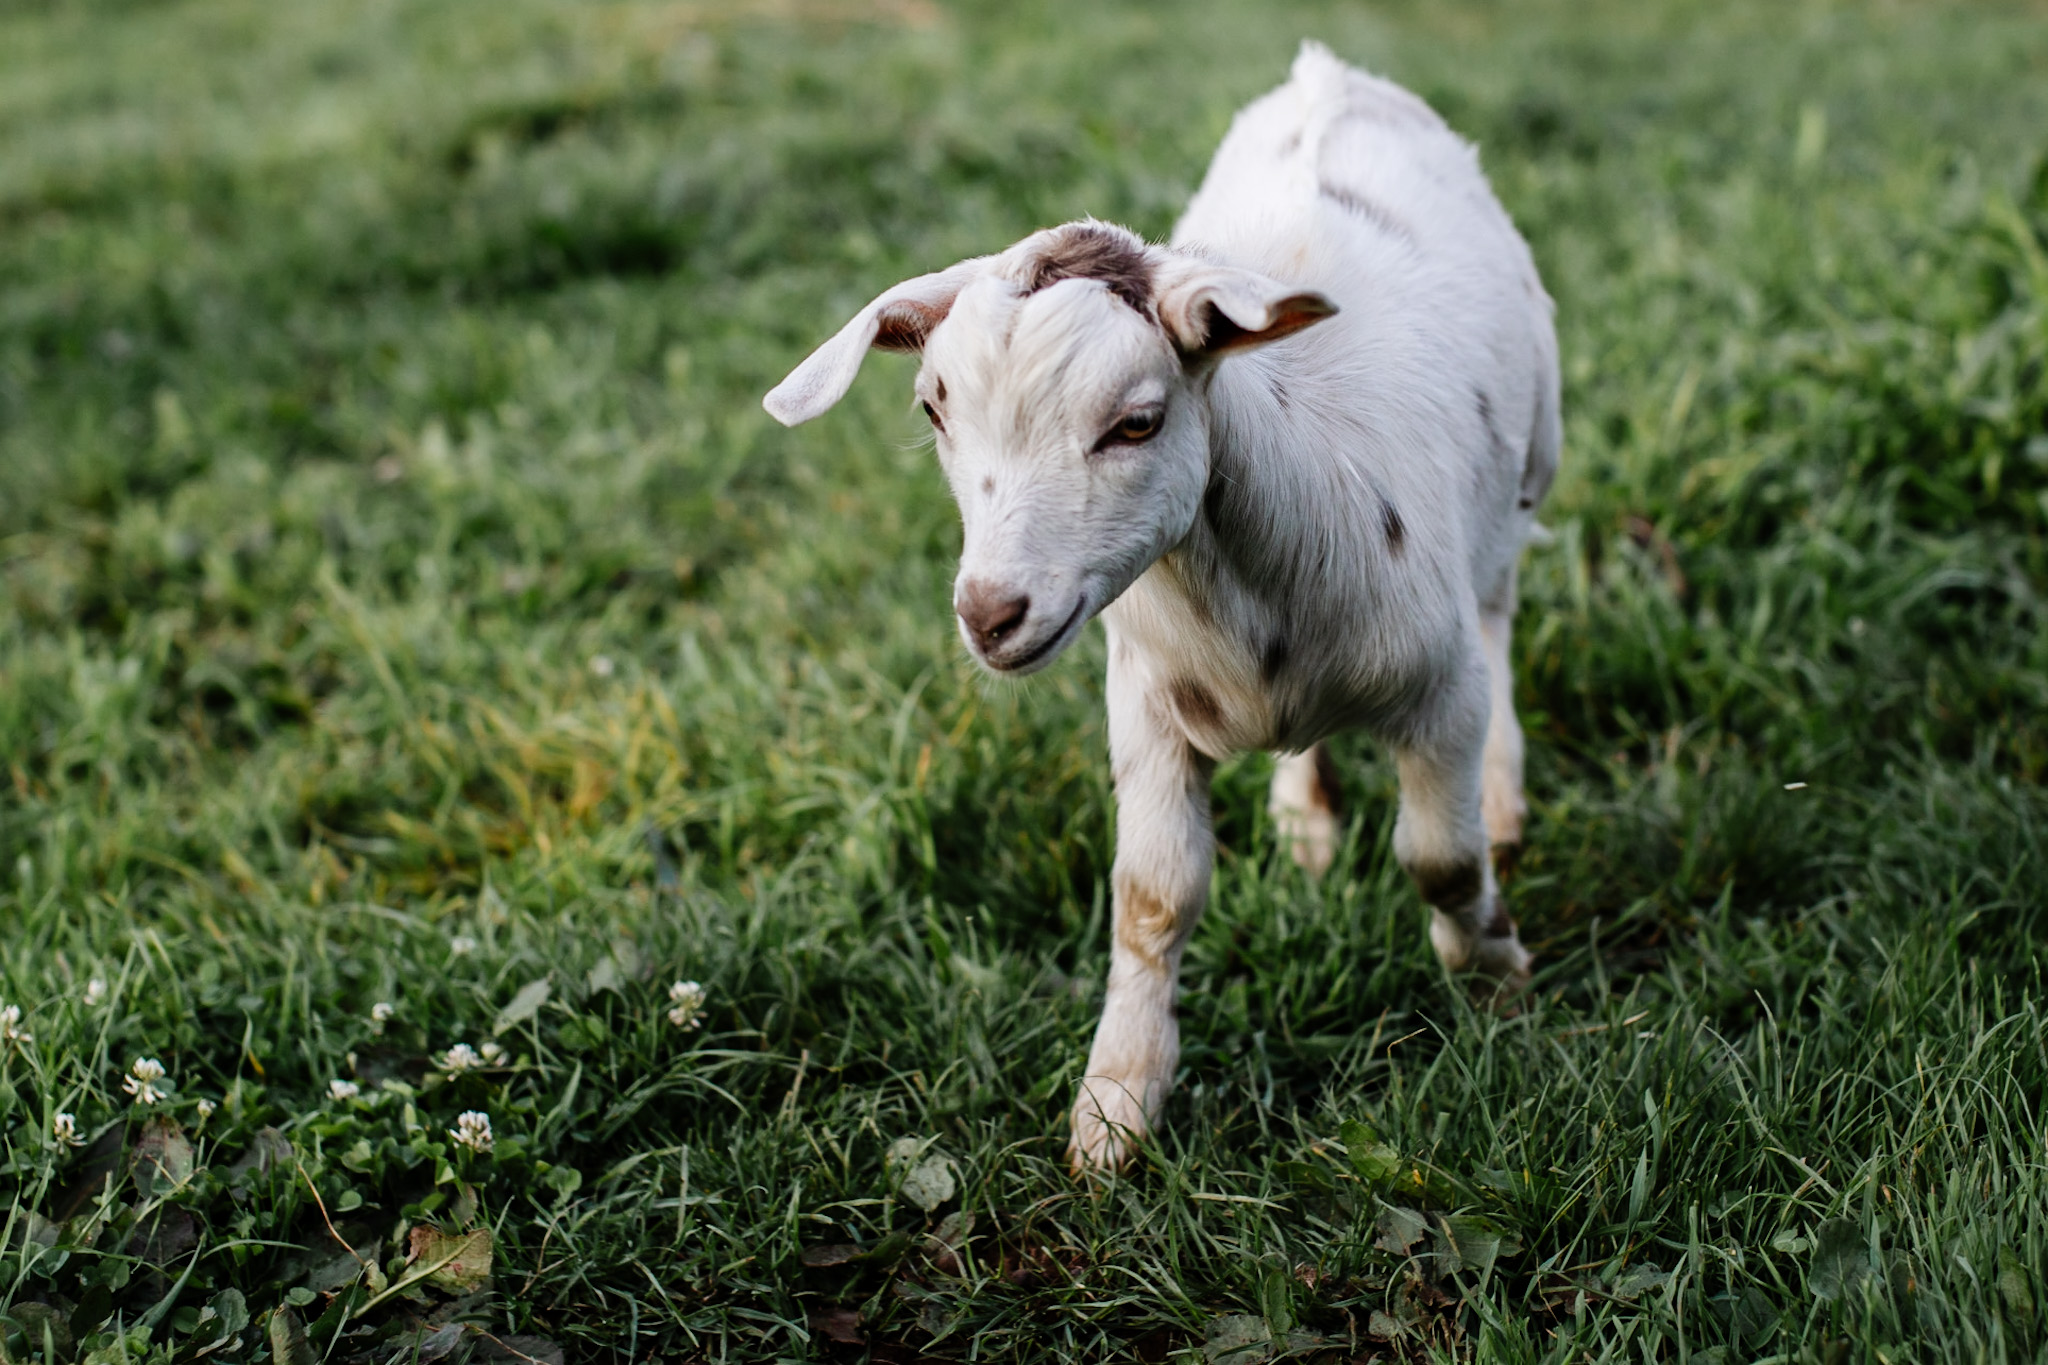 SpottyWot the Miniature goat